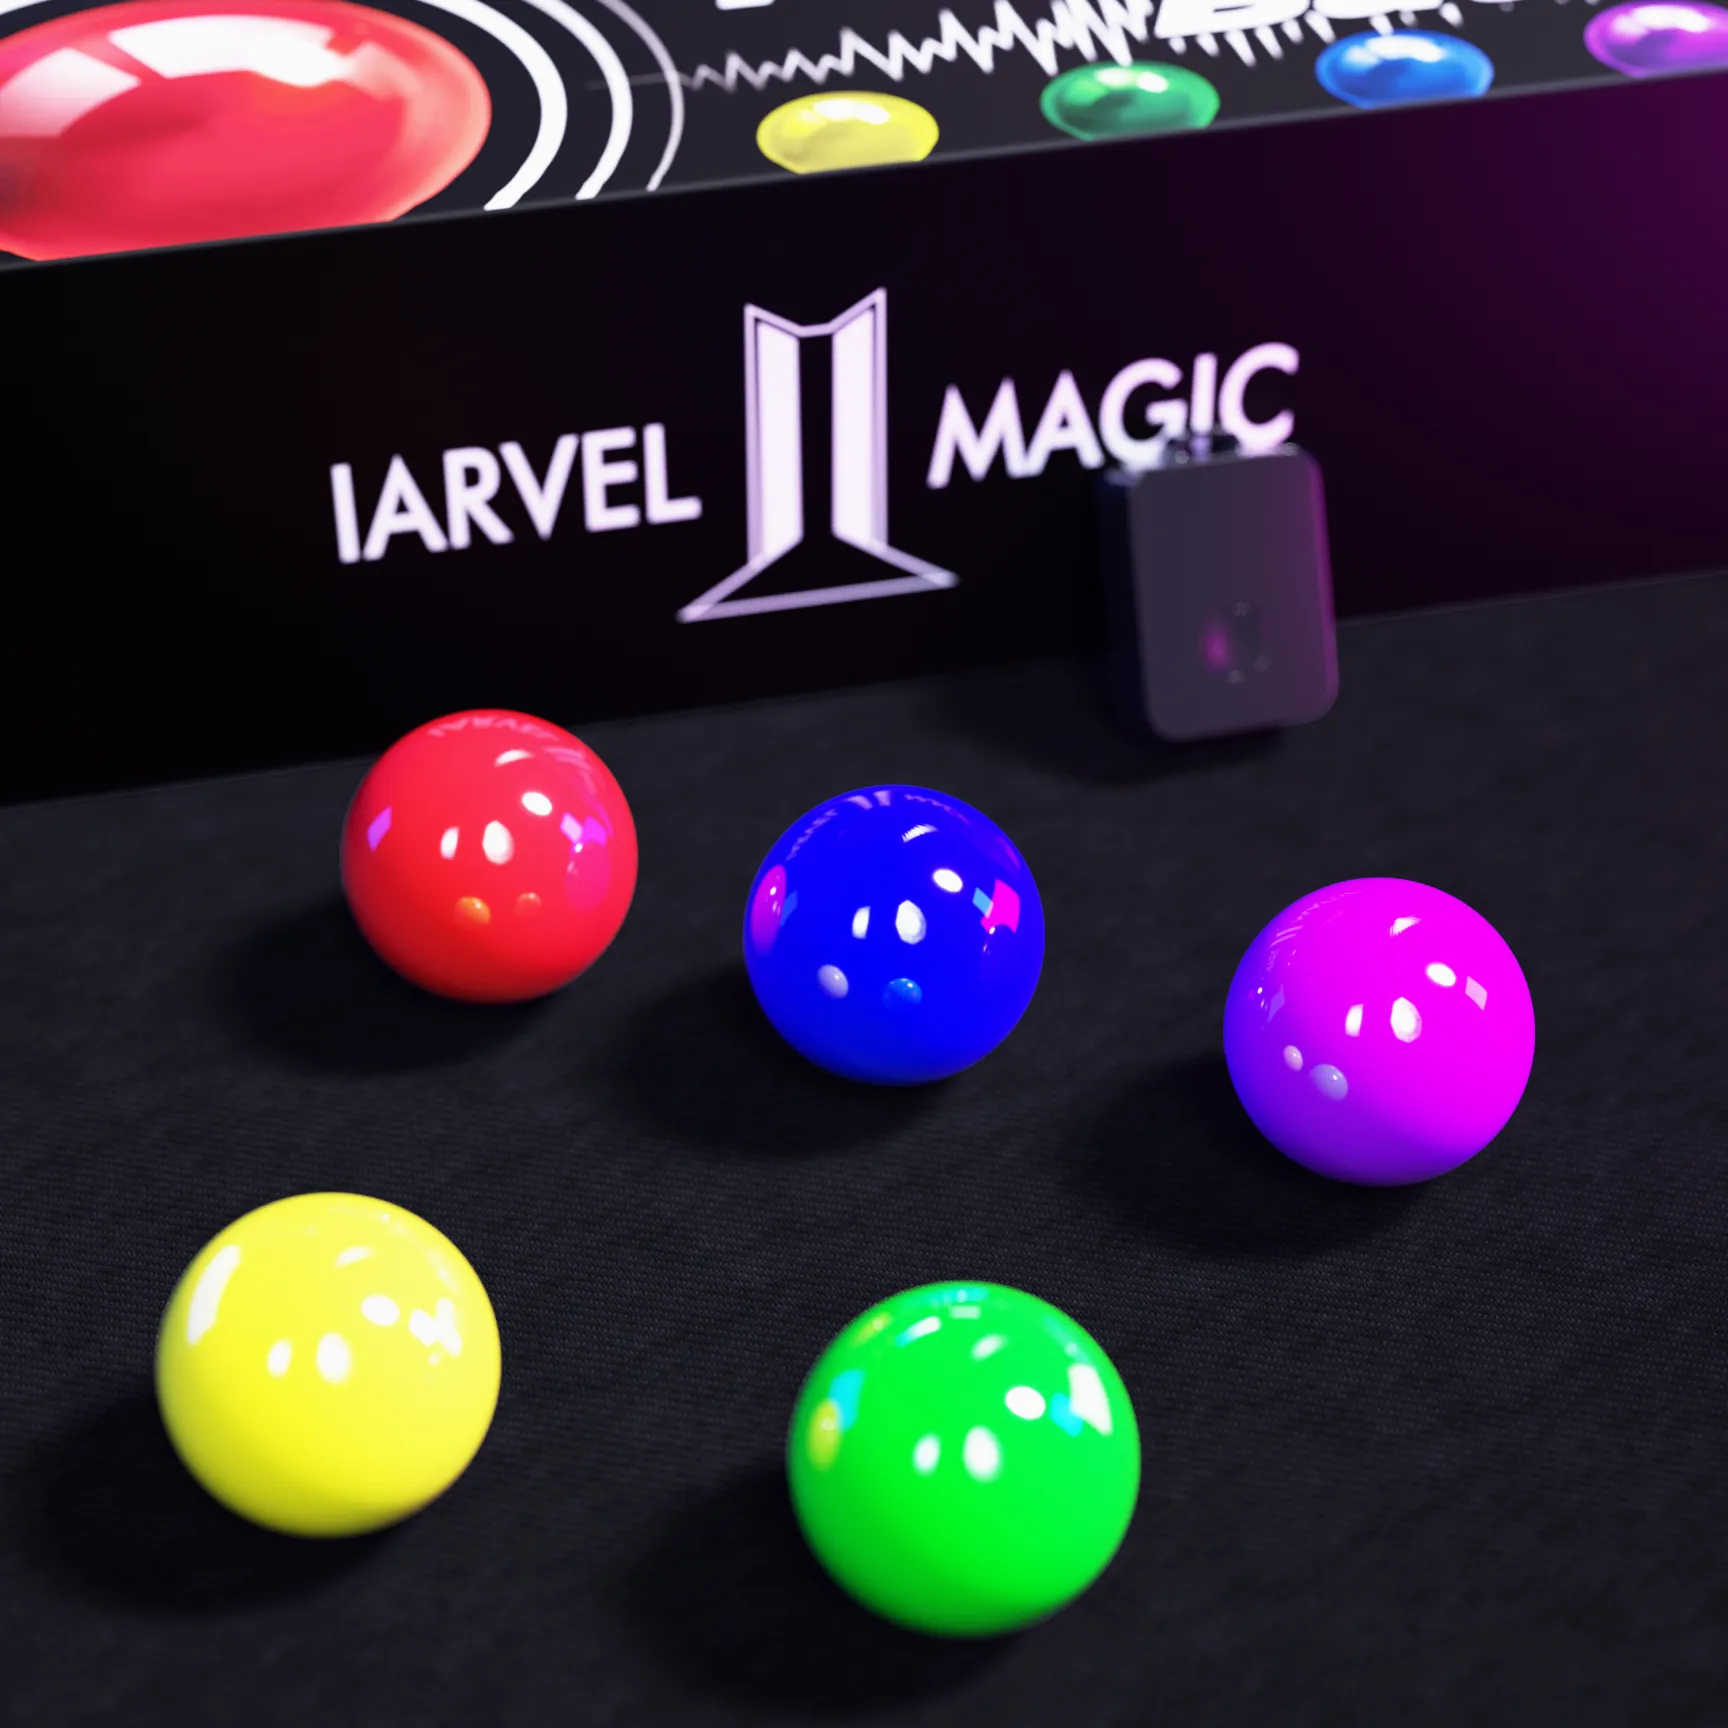 MIND BALL BY IARVEL MAGIC-N2G Presents